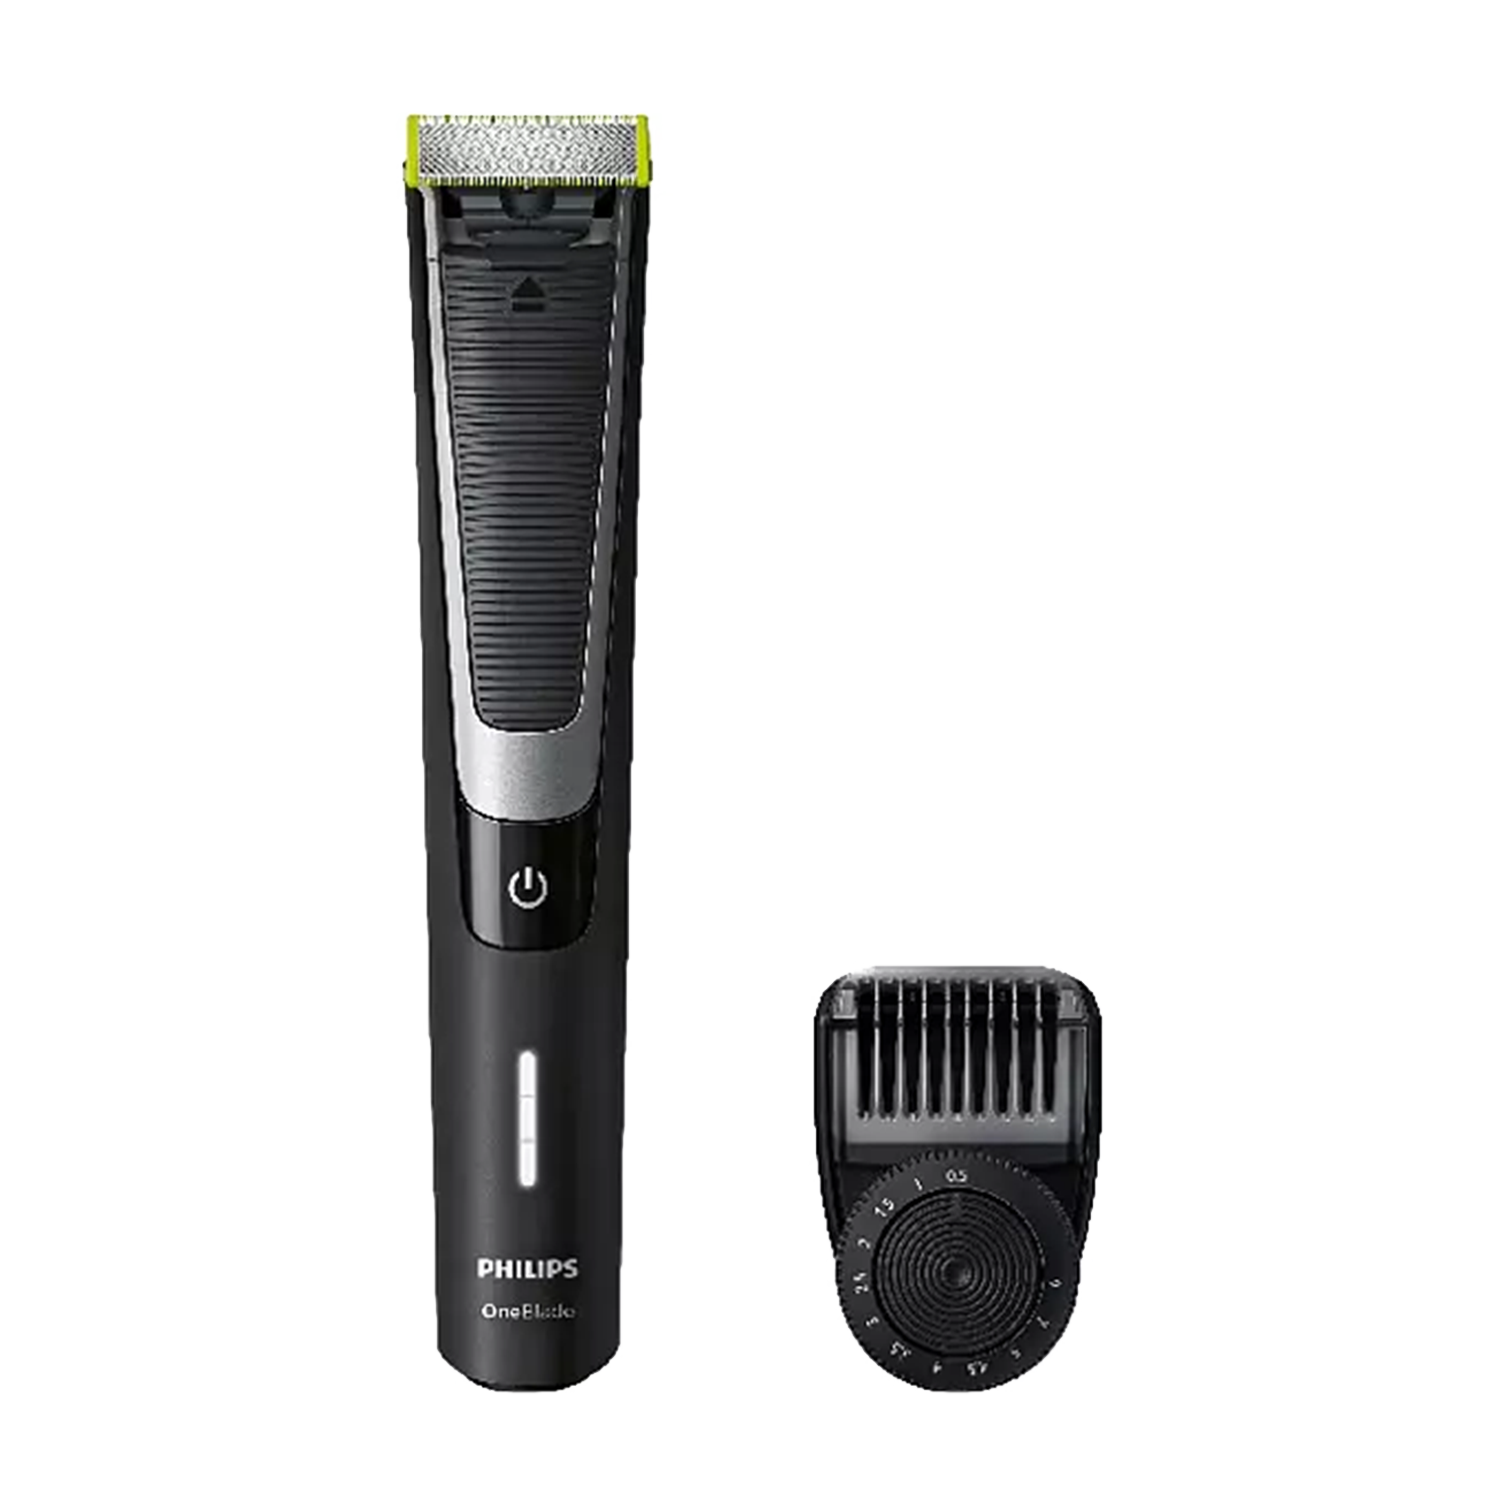 Afeitadora Philips Oneblade pro qp651020 maquinilla de blade barberoperfilador negro qp6510 recargable 60 min. aut. 12 niveles corte perfiladorbarbero cara recorta peine 0.5 9mm